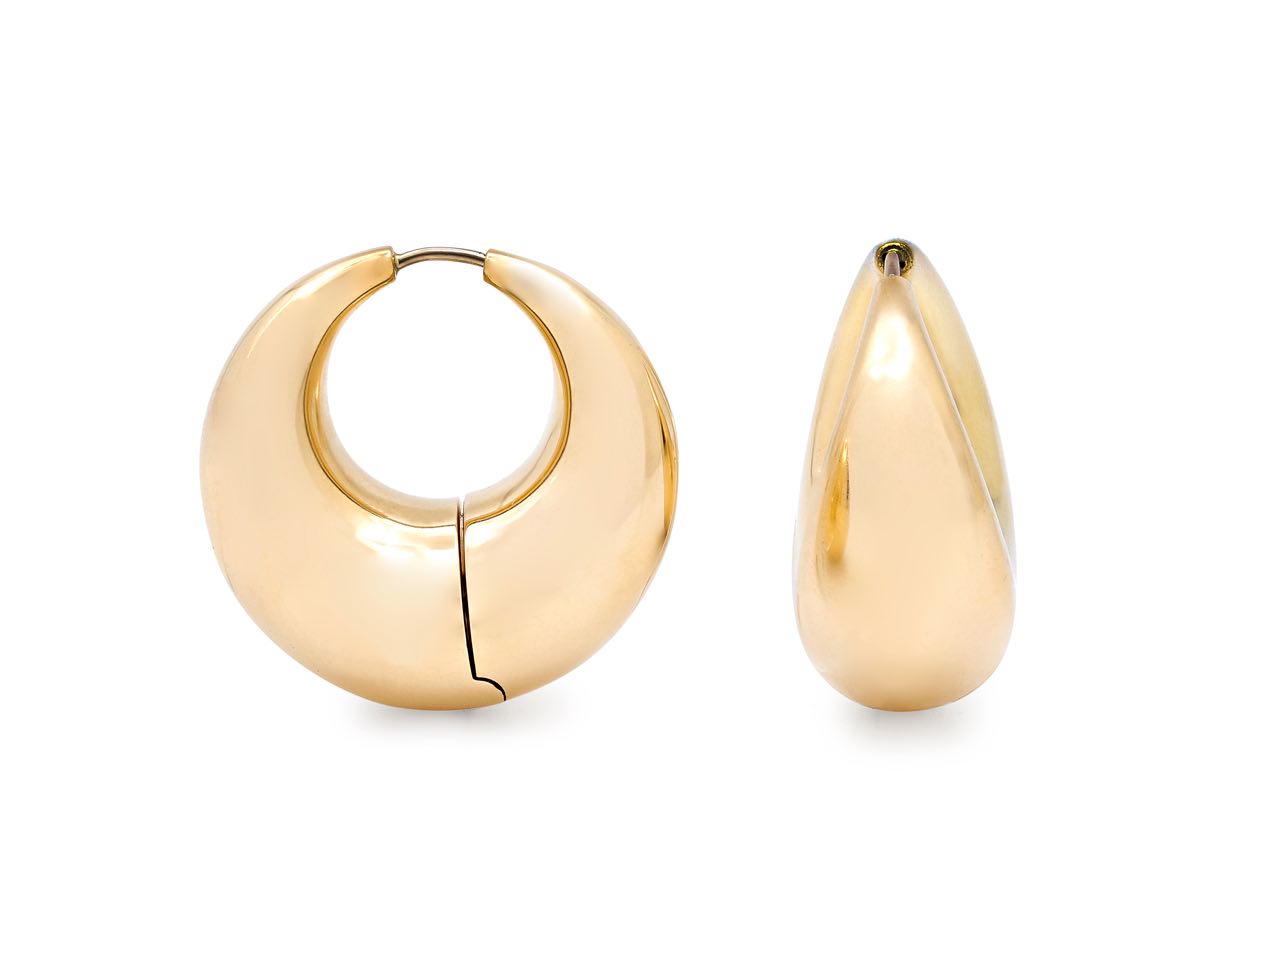 Crescent Hoop Earrings in 18K Gold, Large, by Beladora